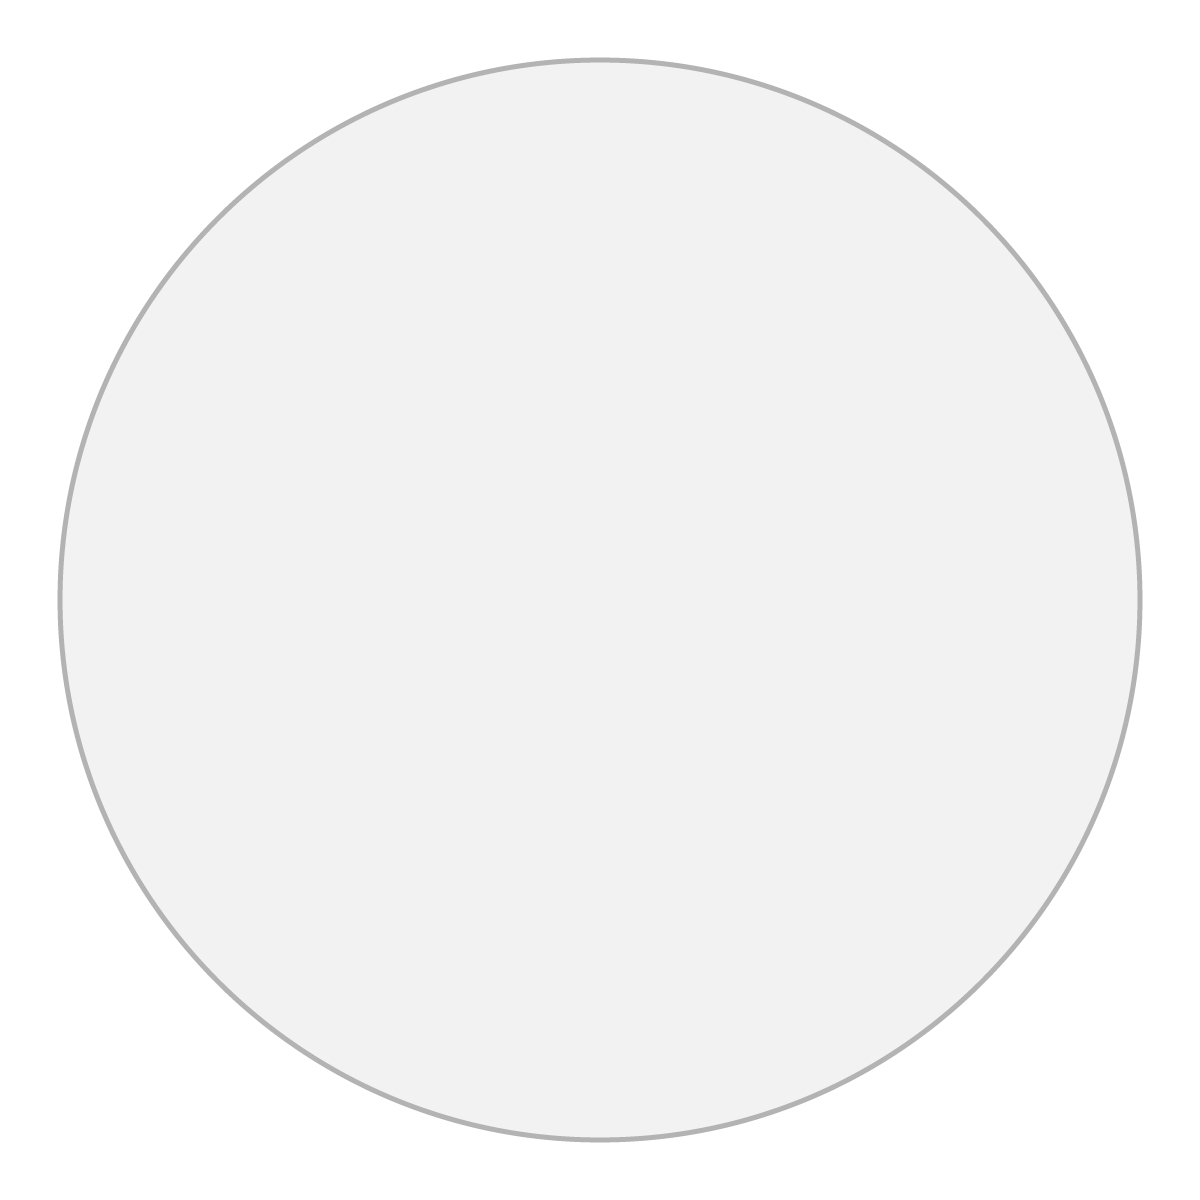 White 1" Circle Full Color Sticker